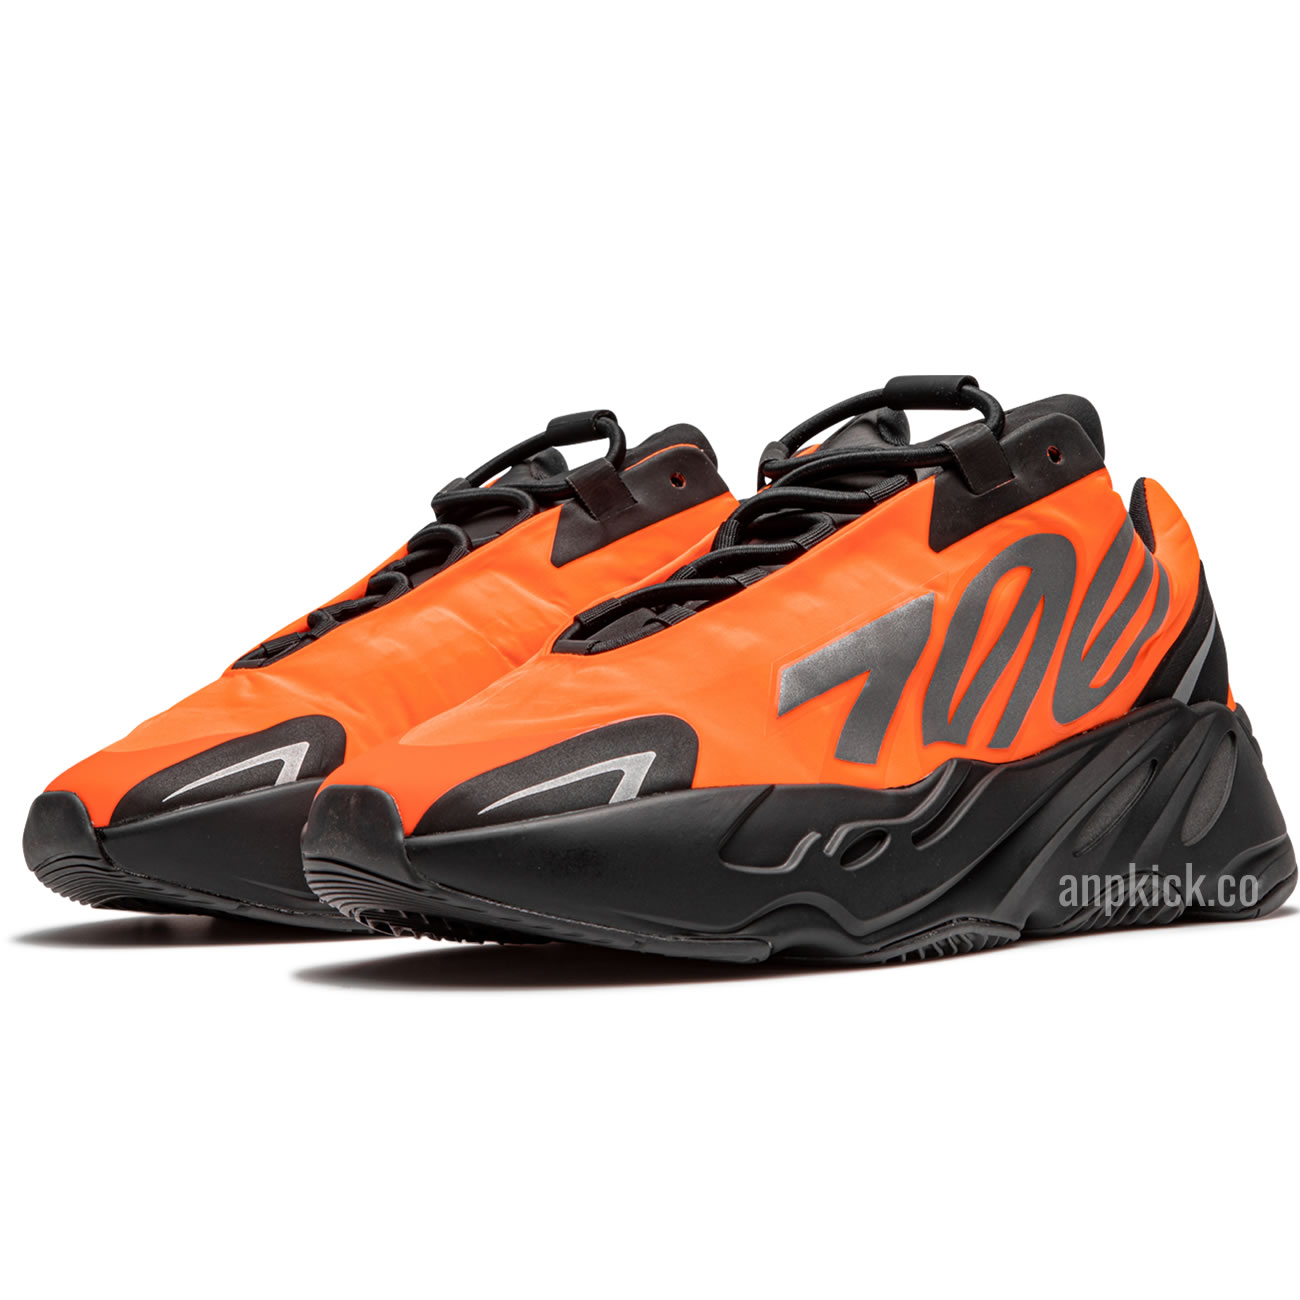 Adidas Yeezy 700 Mnvn Orange Release For Sale Fv3258 (2) - newkick.org